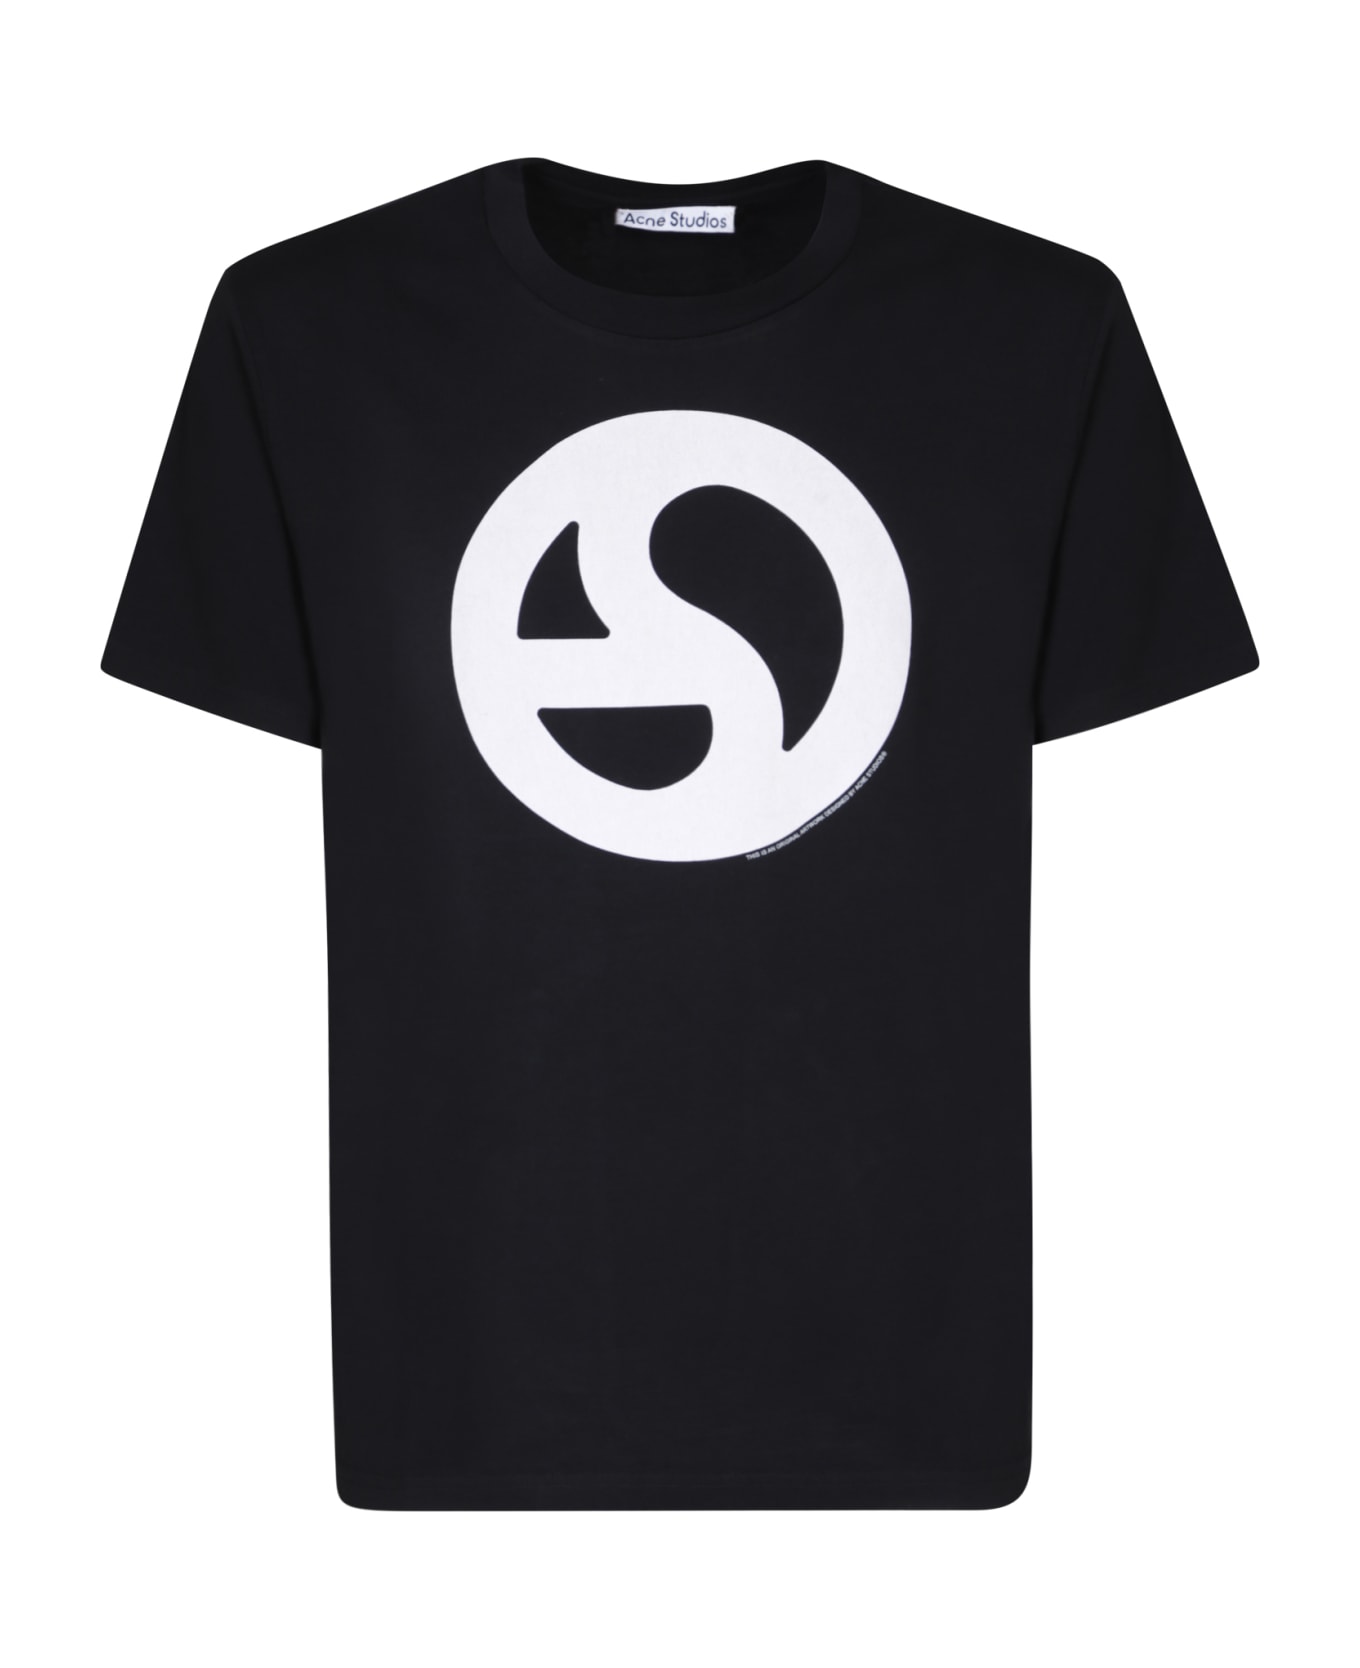 Acne Studios Everest Logogram Crewneck T-shirt - Black シャツ